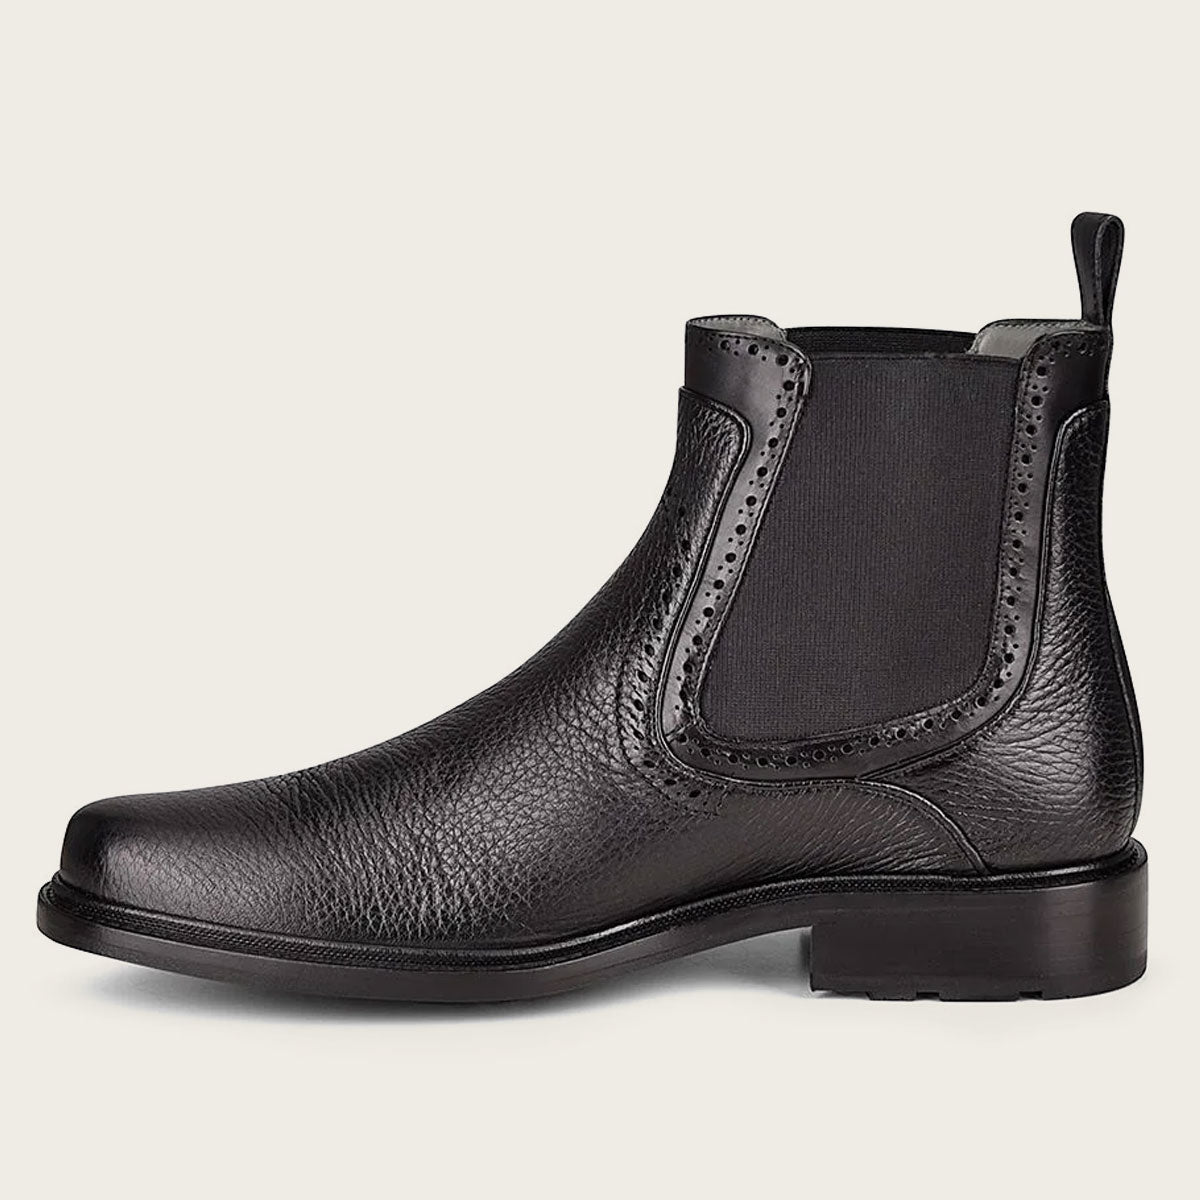 Black deer leather chelsea boots